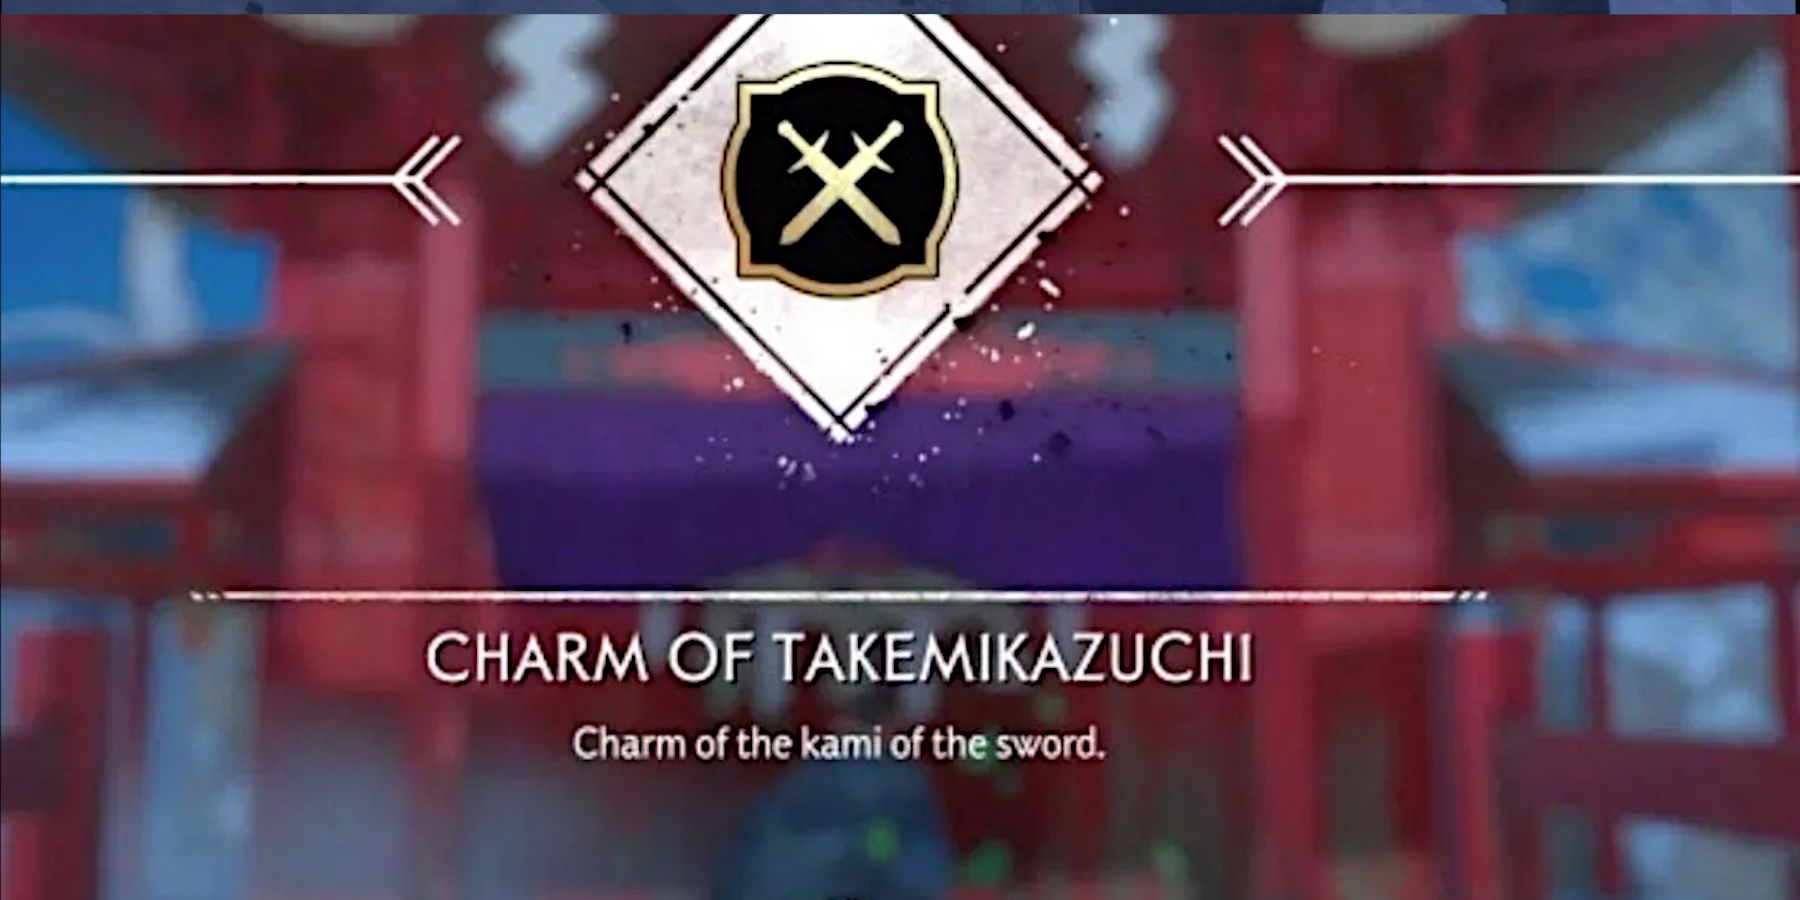 Jin unlocks the Charm of Takemikazuchi